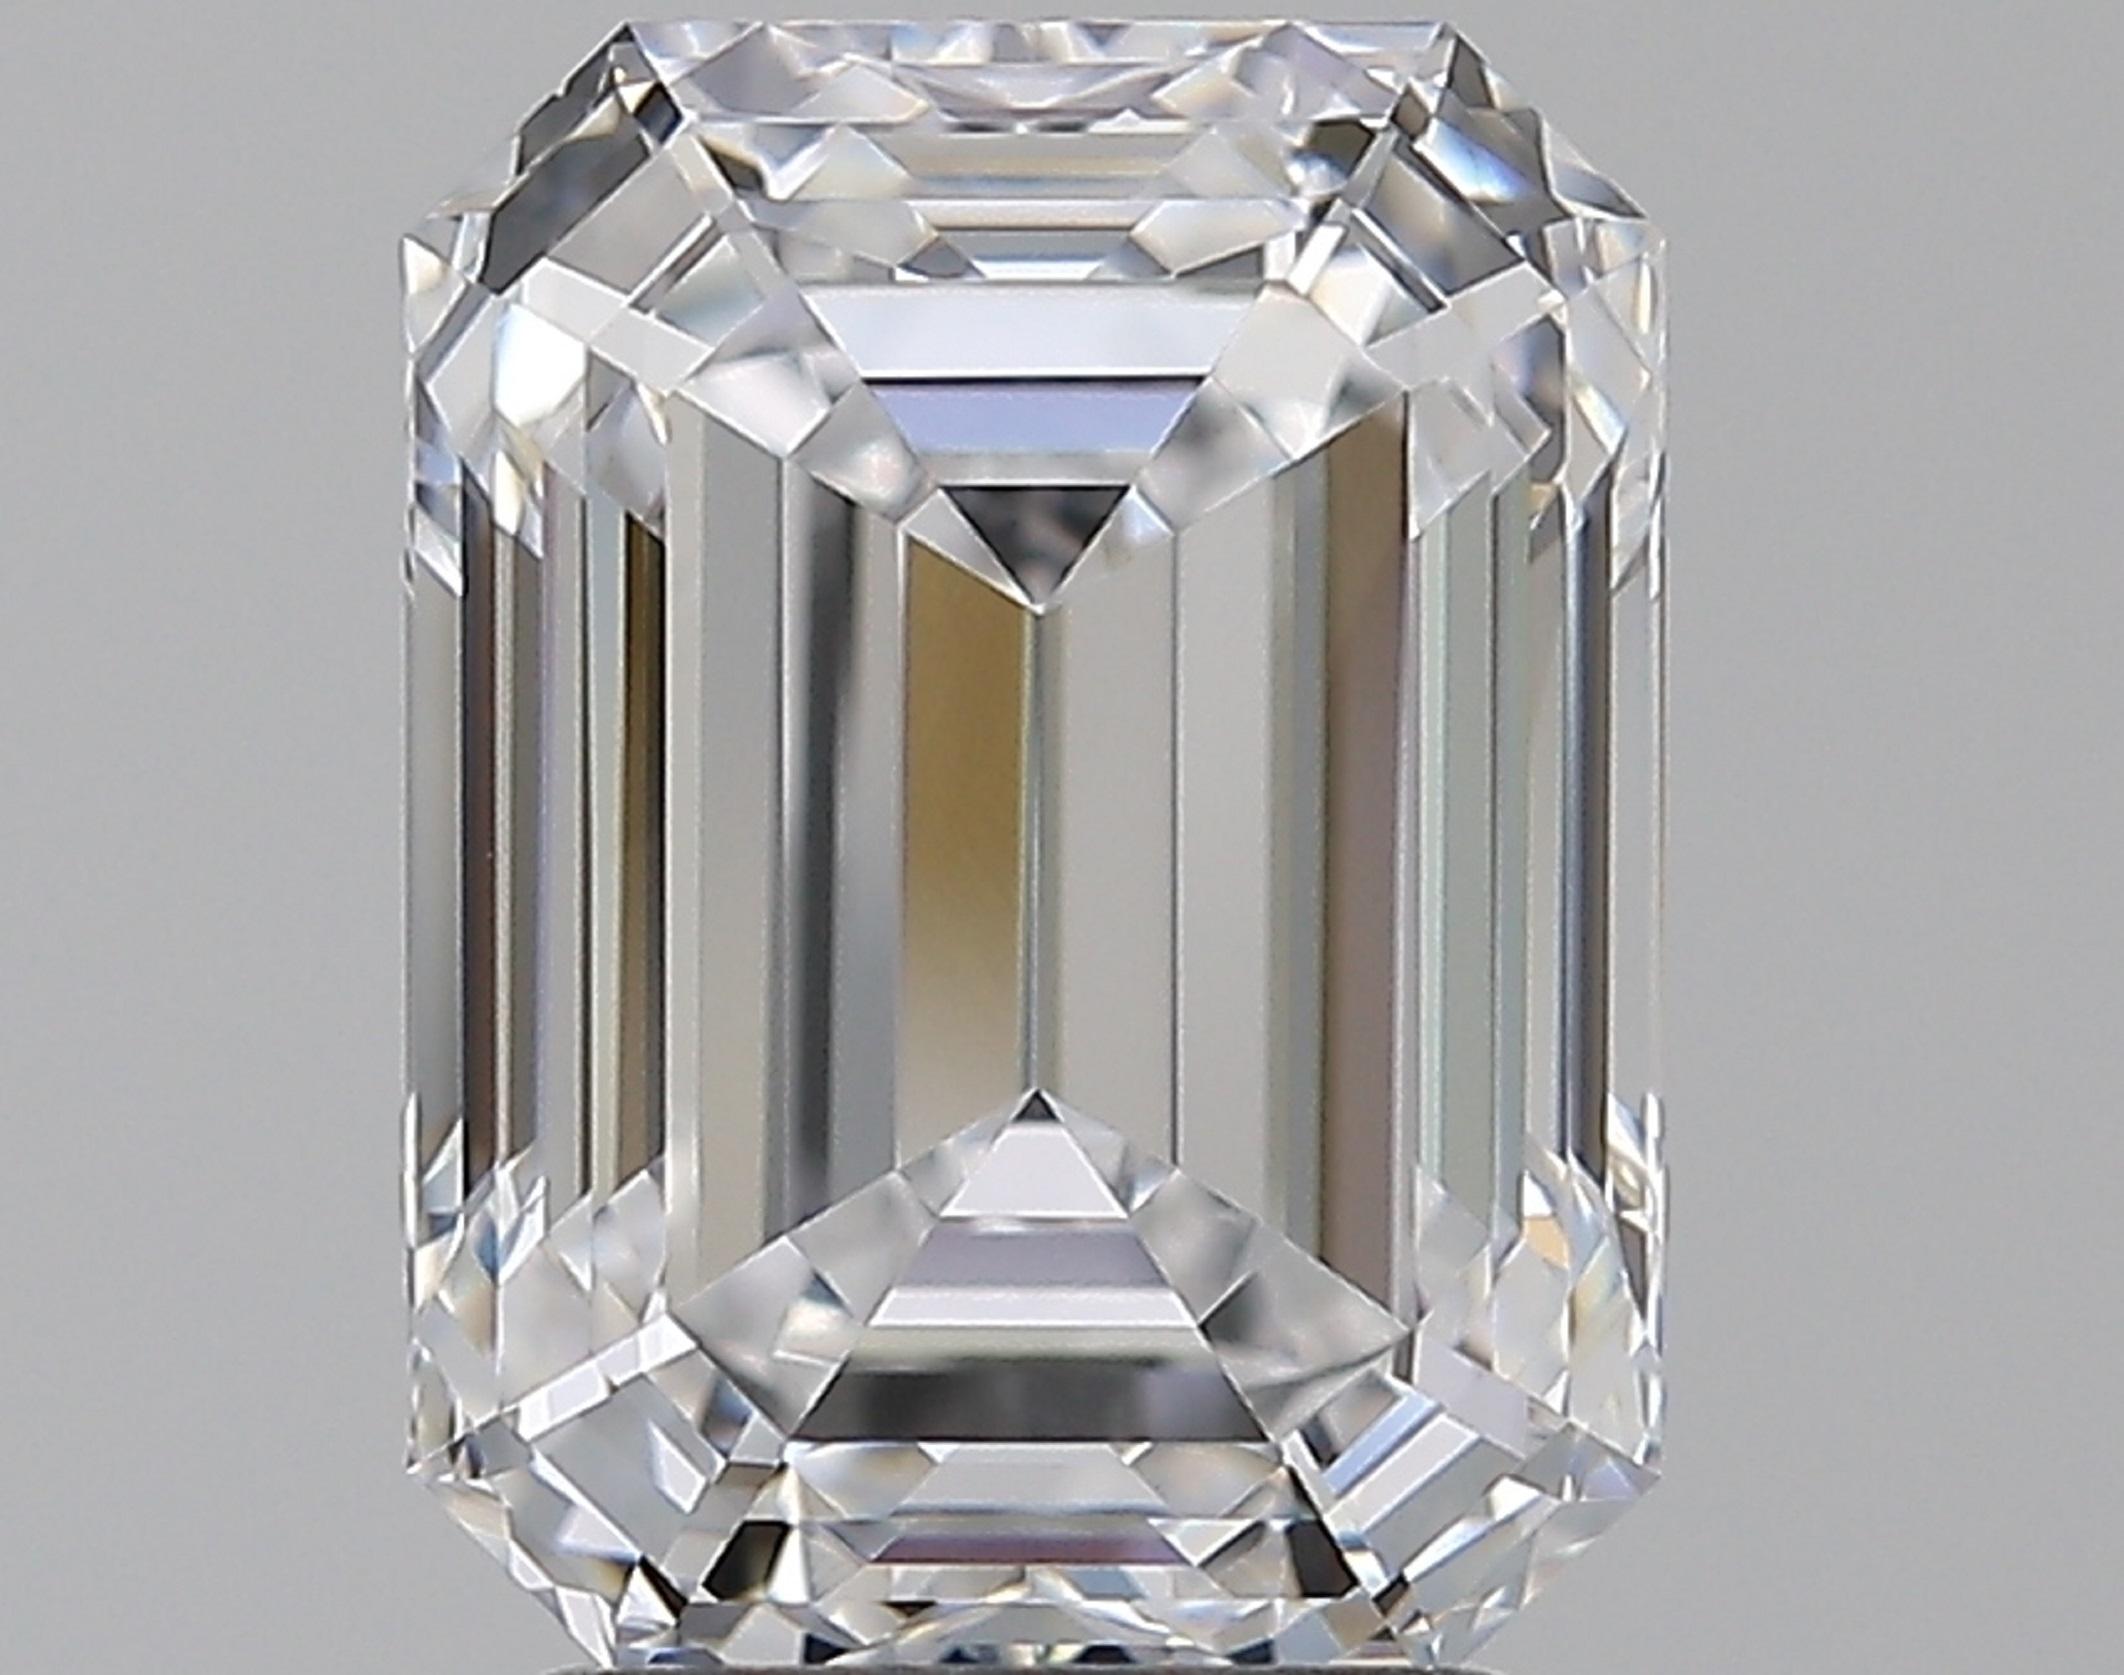 GIA Certified 8 Carat Emerald Cut Diamond Solitaire Ring
H Color
VVS2 Clarity
Excellent Polish
Excellent Symmetry
